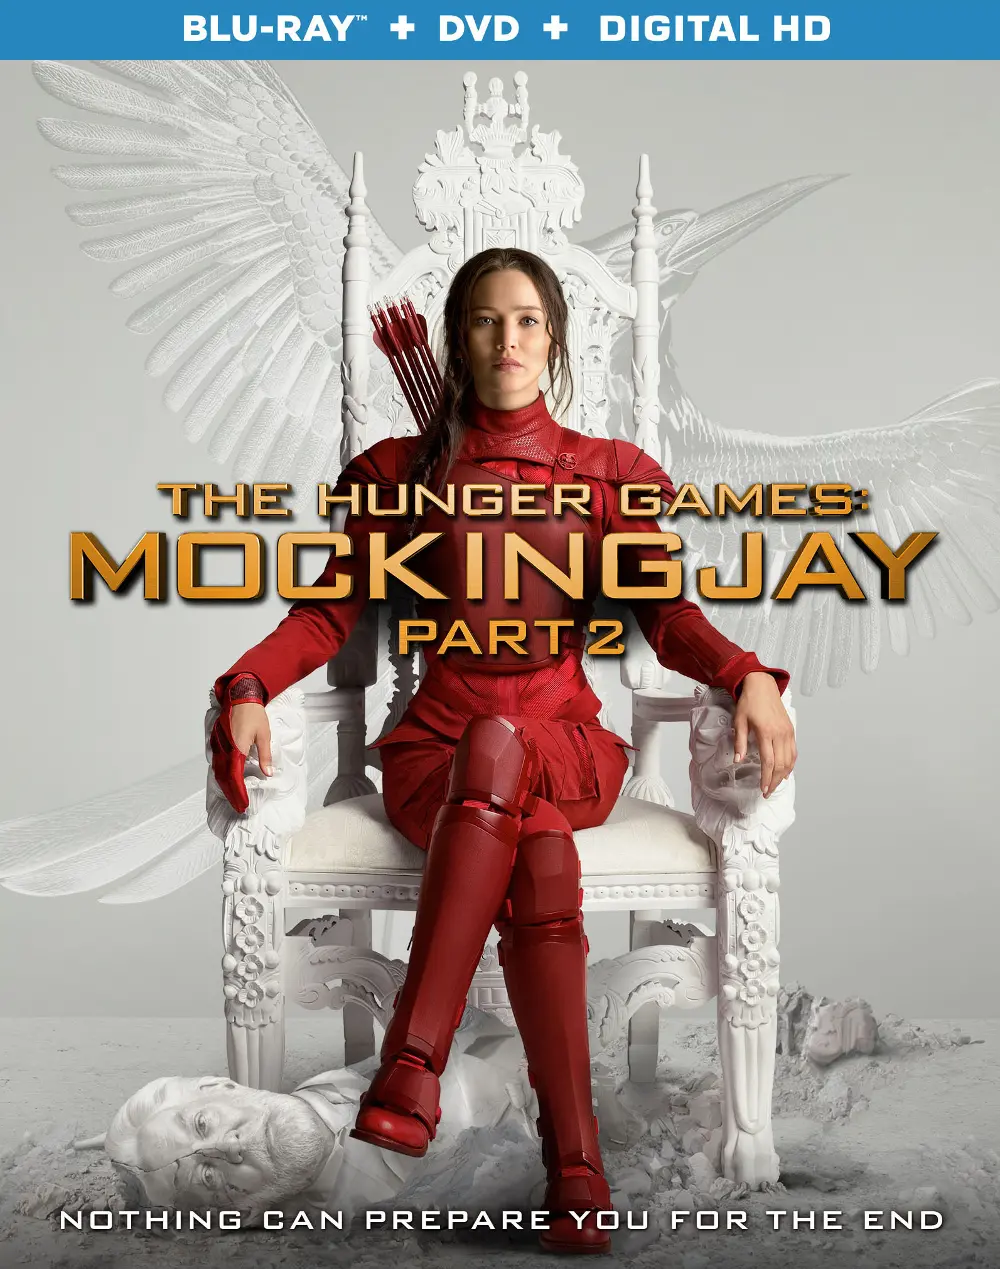 The Hunger Games: Mockingjay Part 2  (Blu-ray + DVD + Digital HD)-1